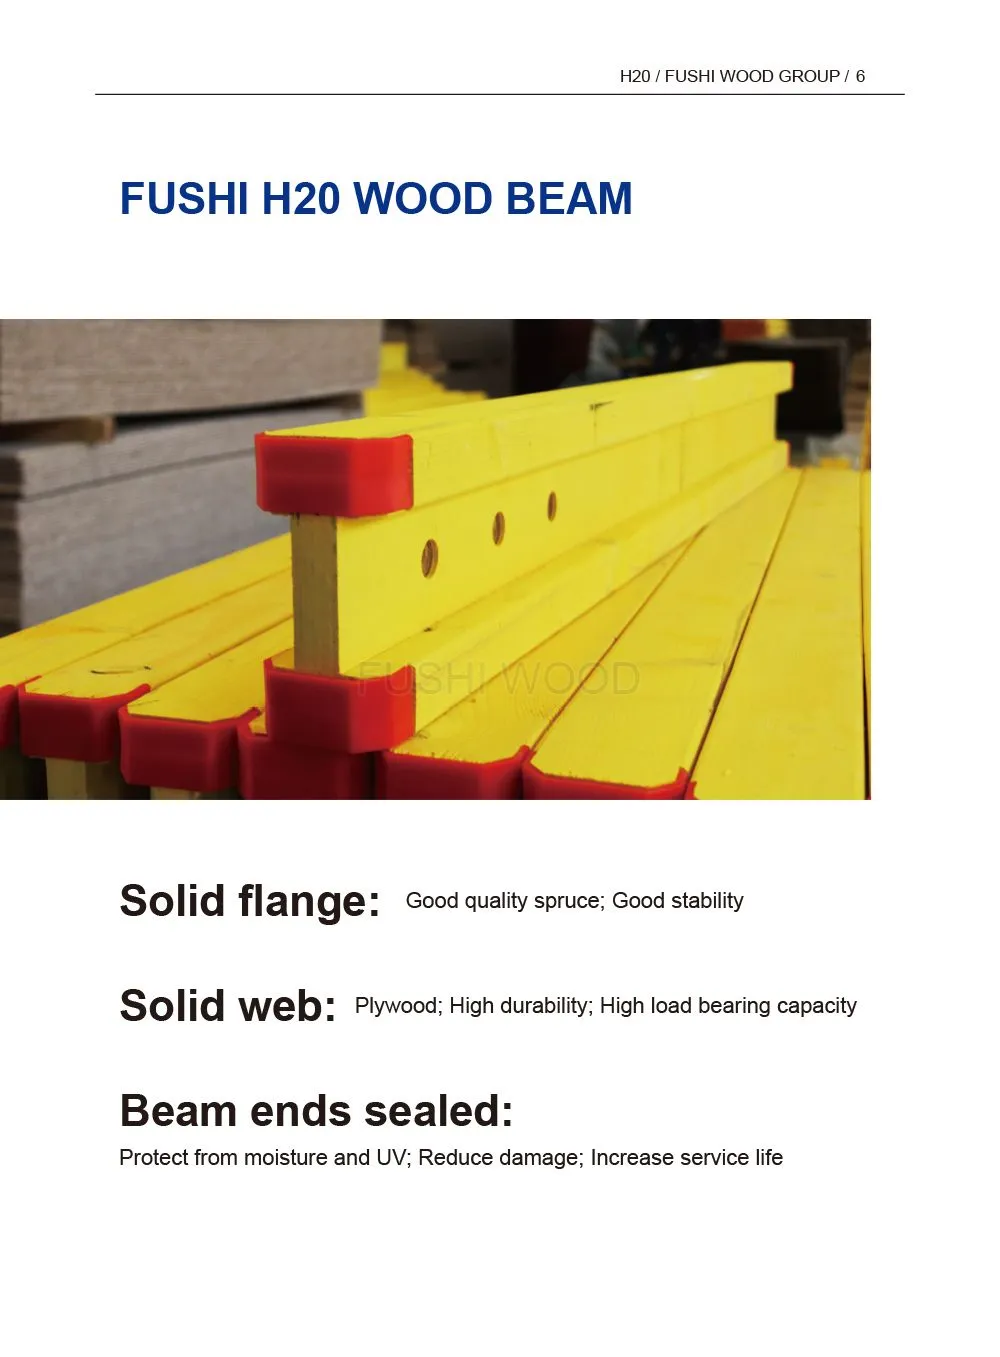 H20 Timber Beams